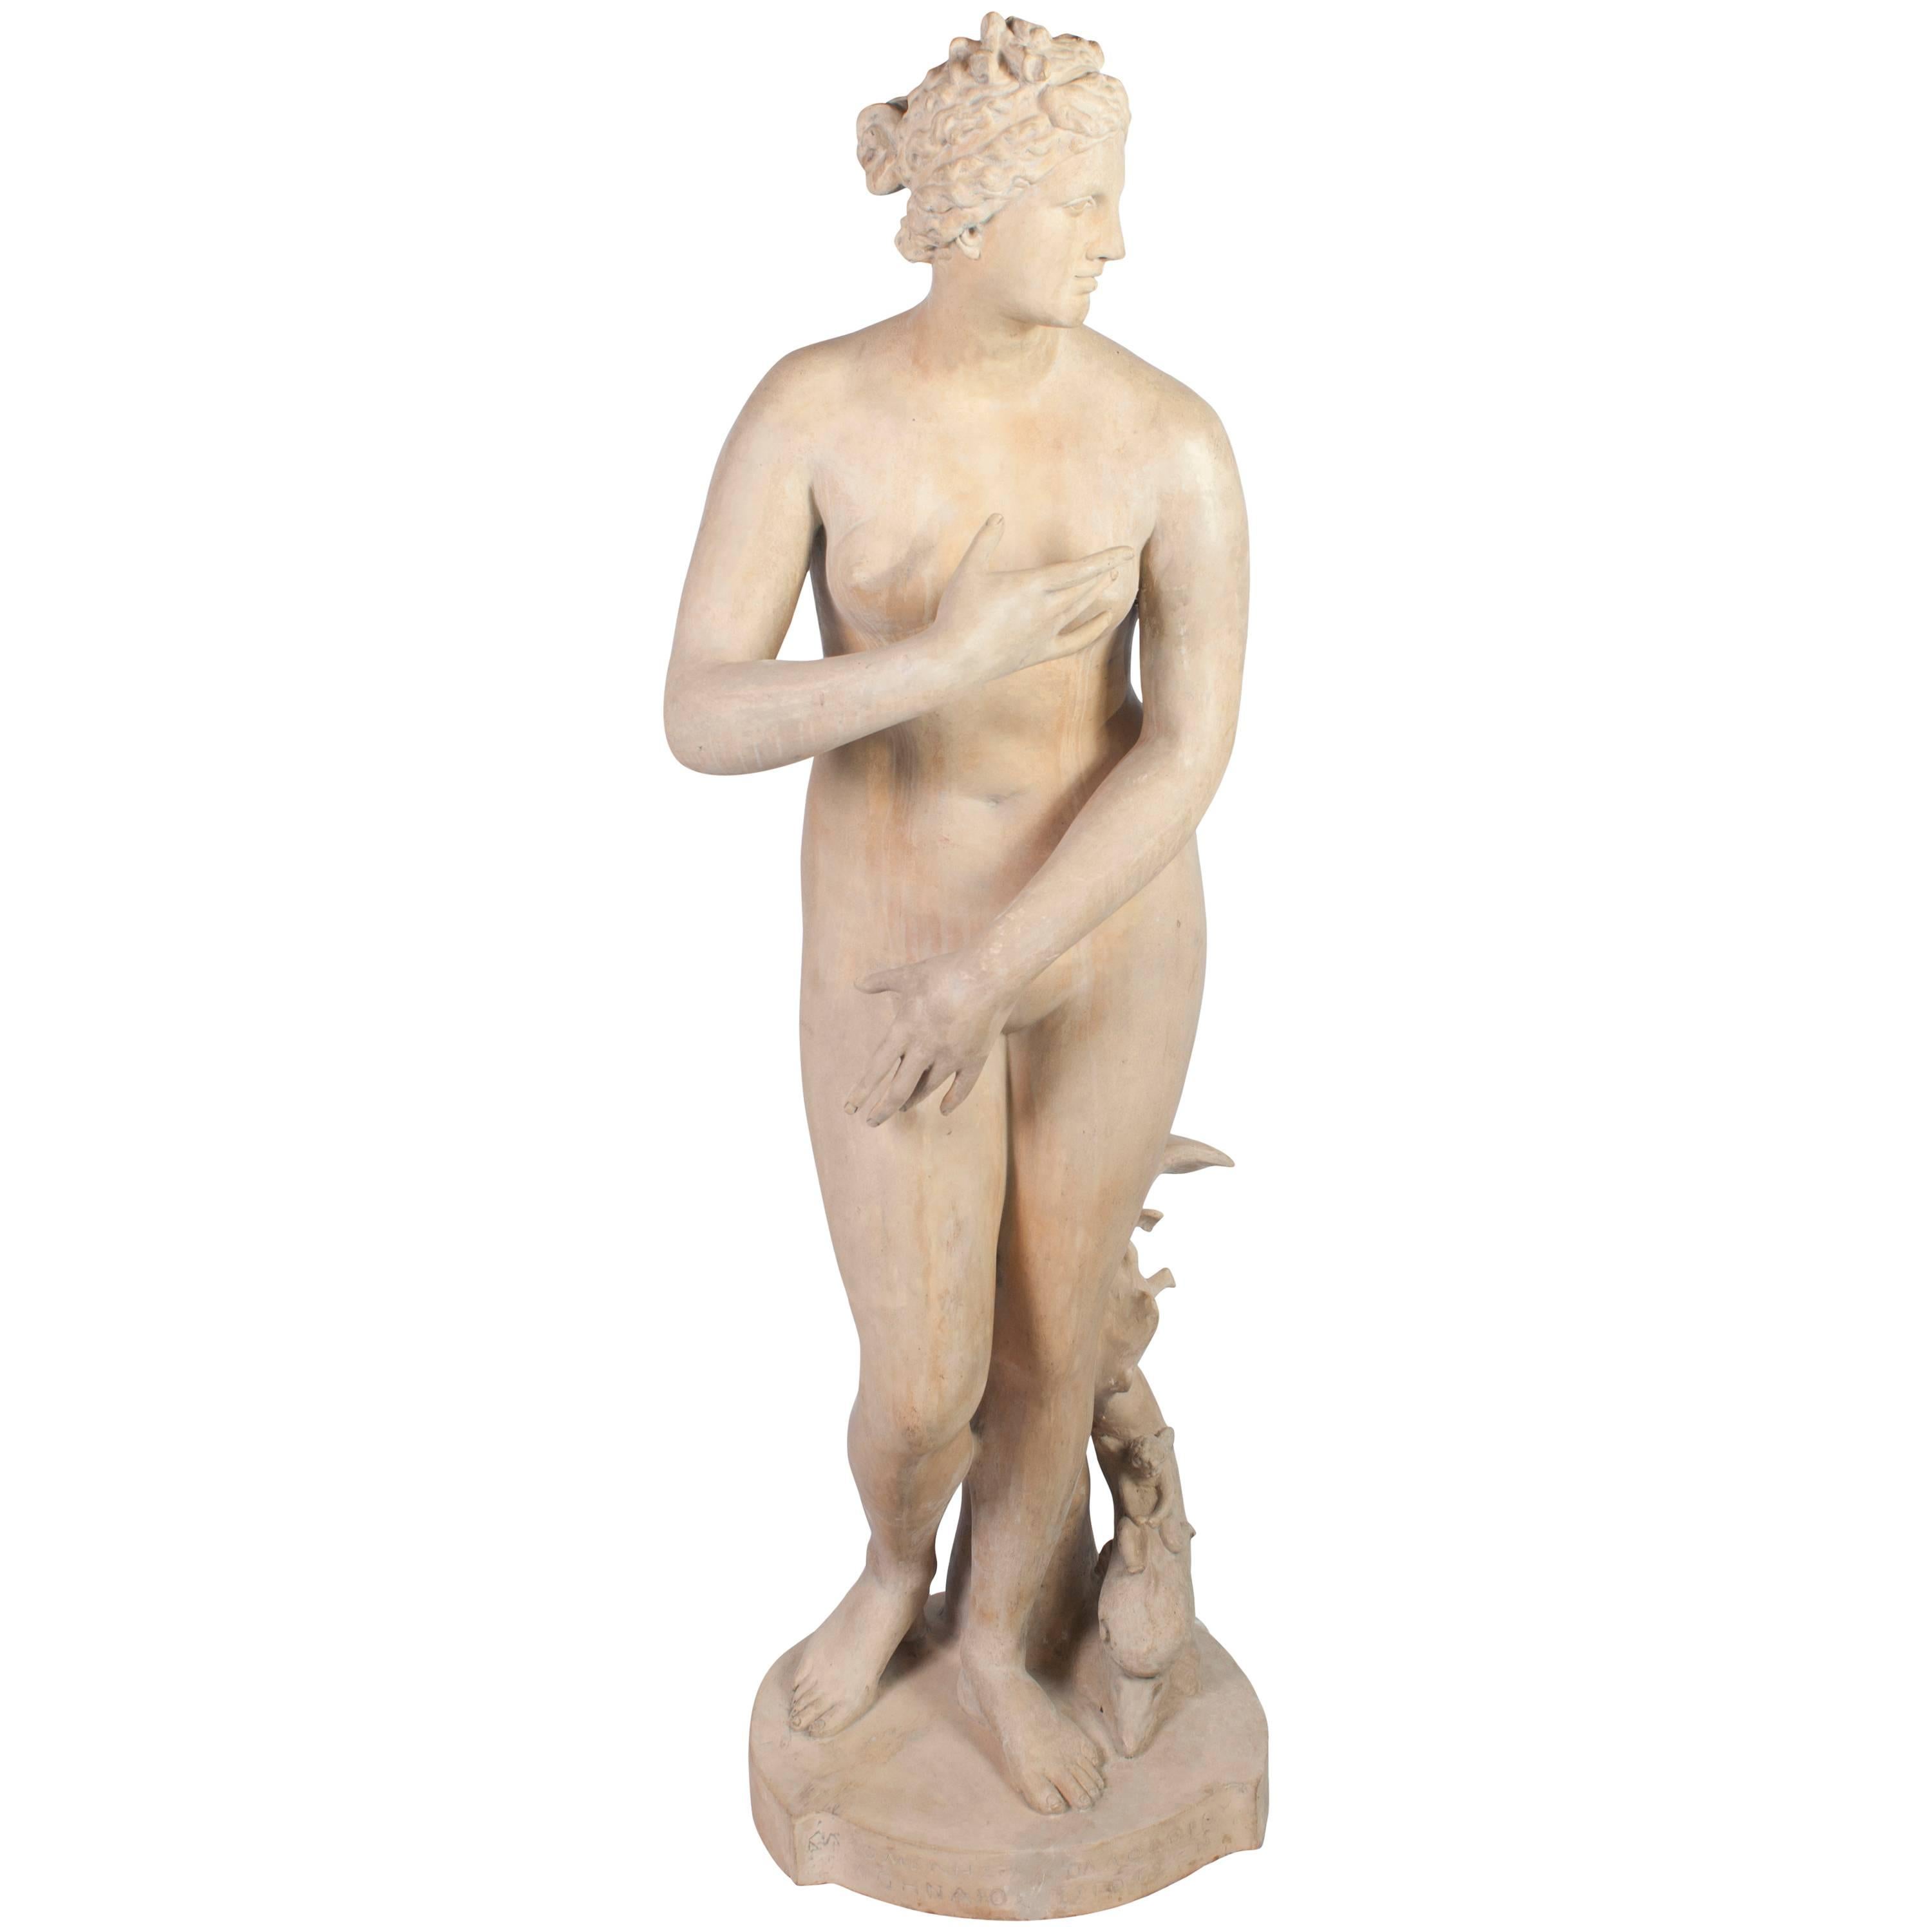 White Terra Cotta Statue of Venus